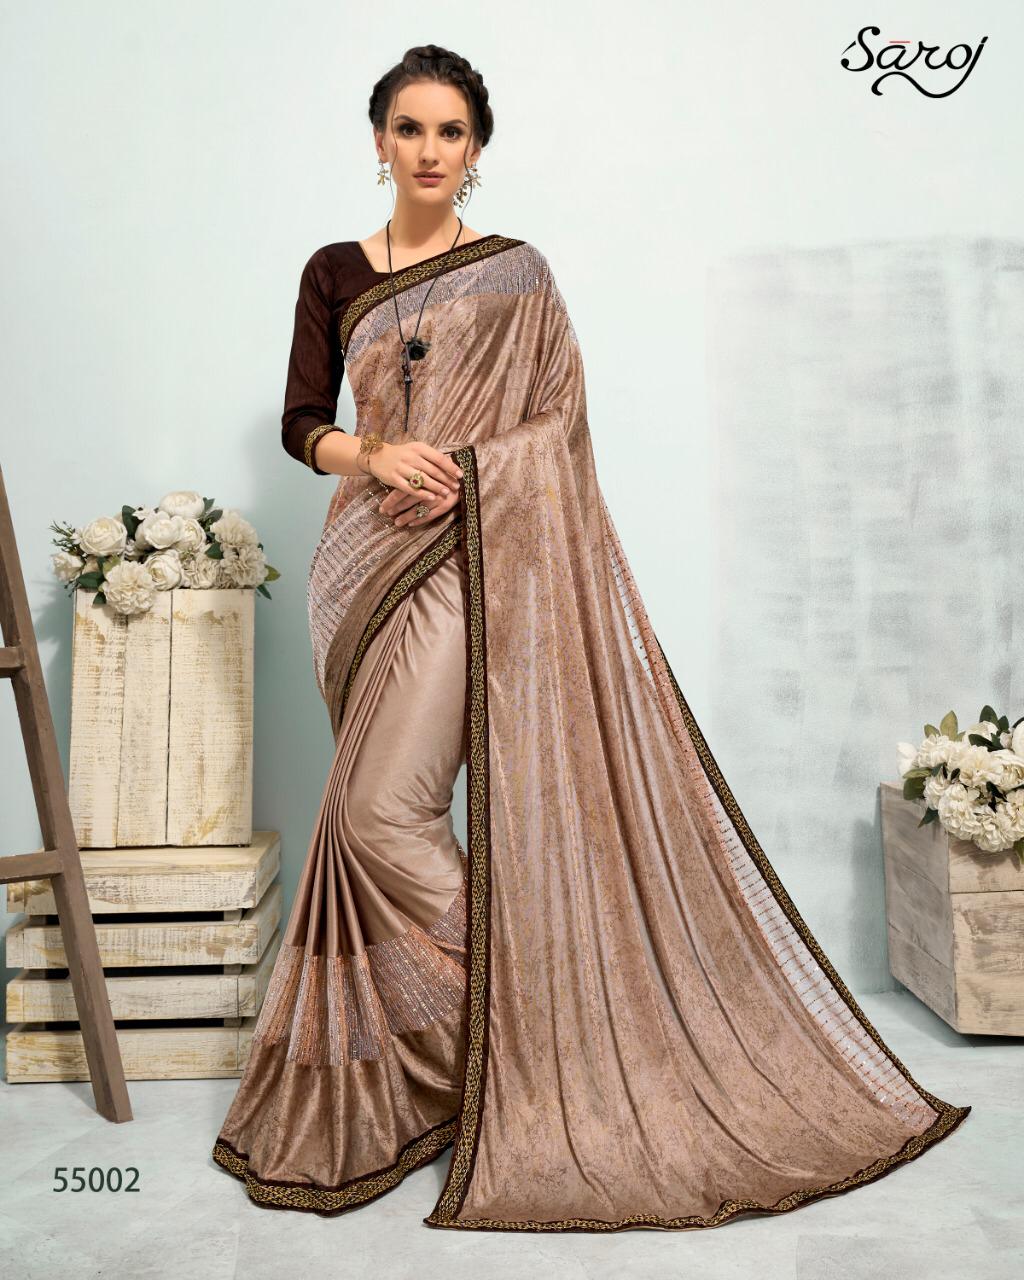 Saroj Aliya beautifully designed sarees in wholesale prices